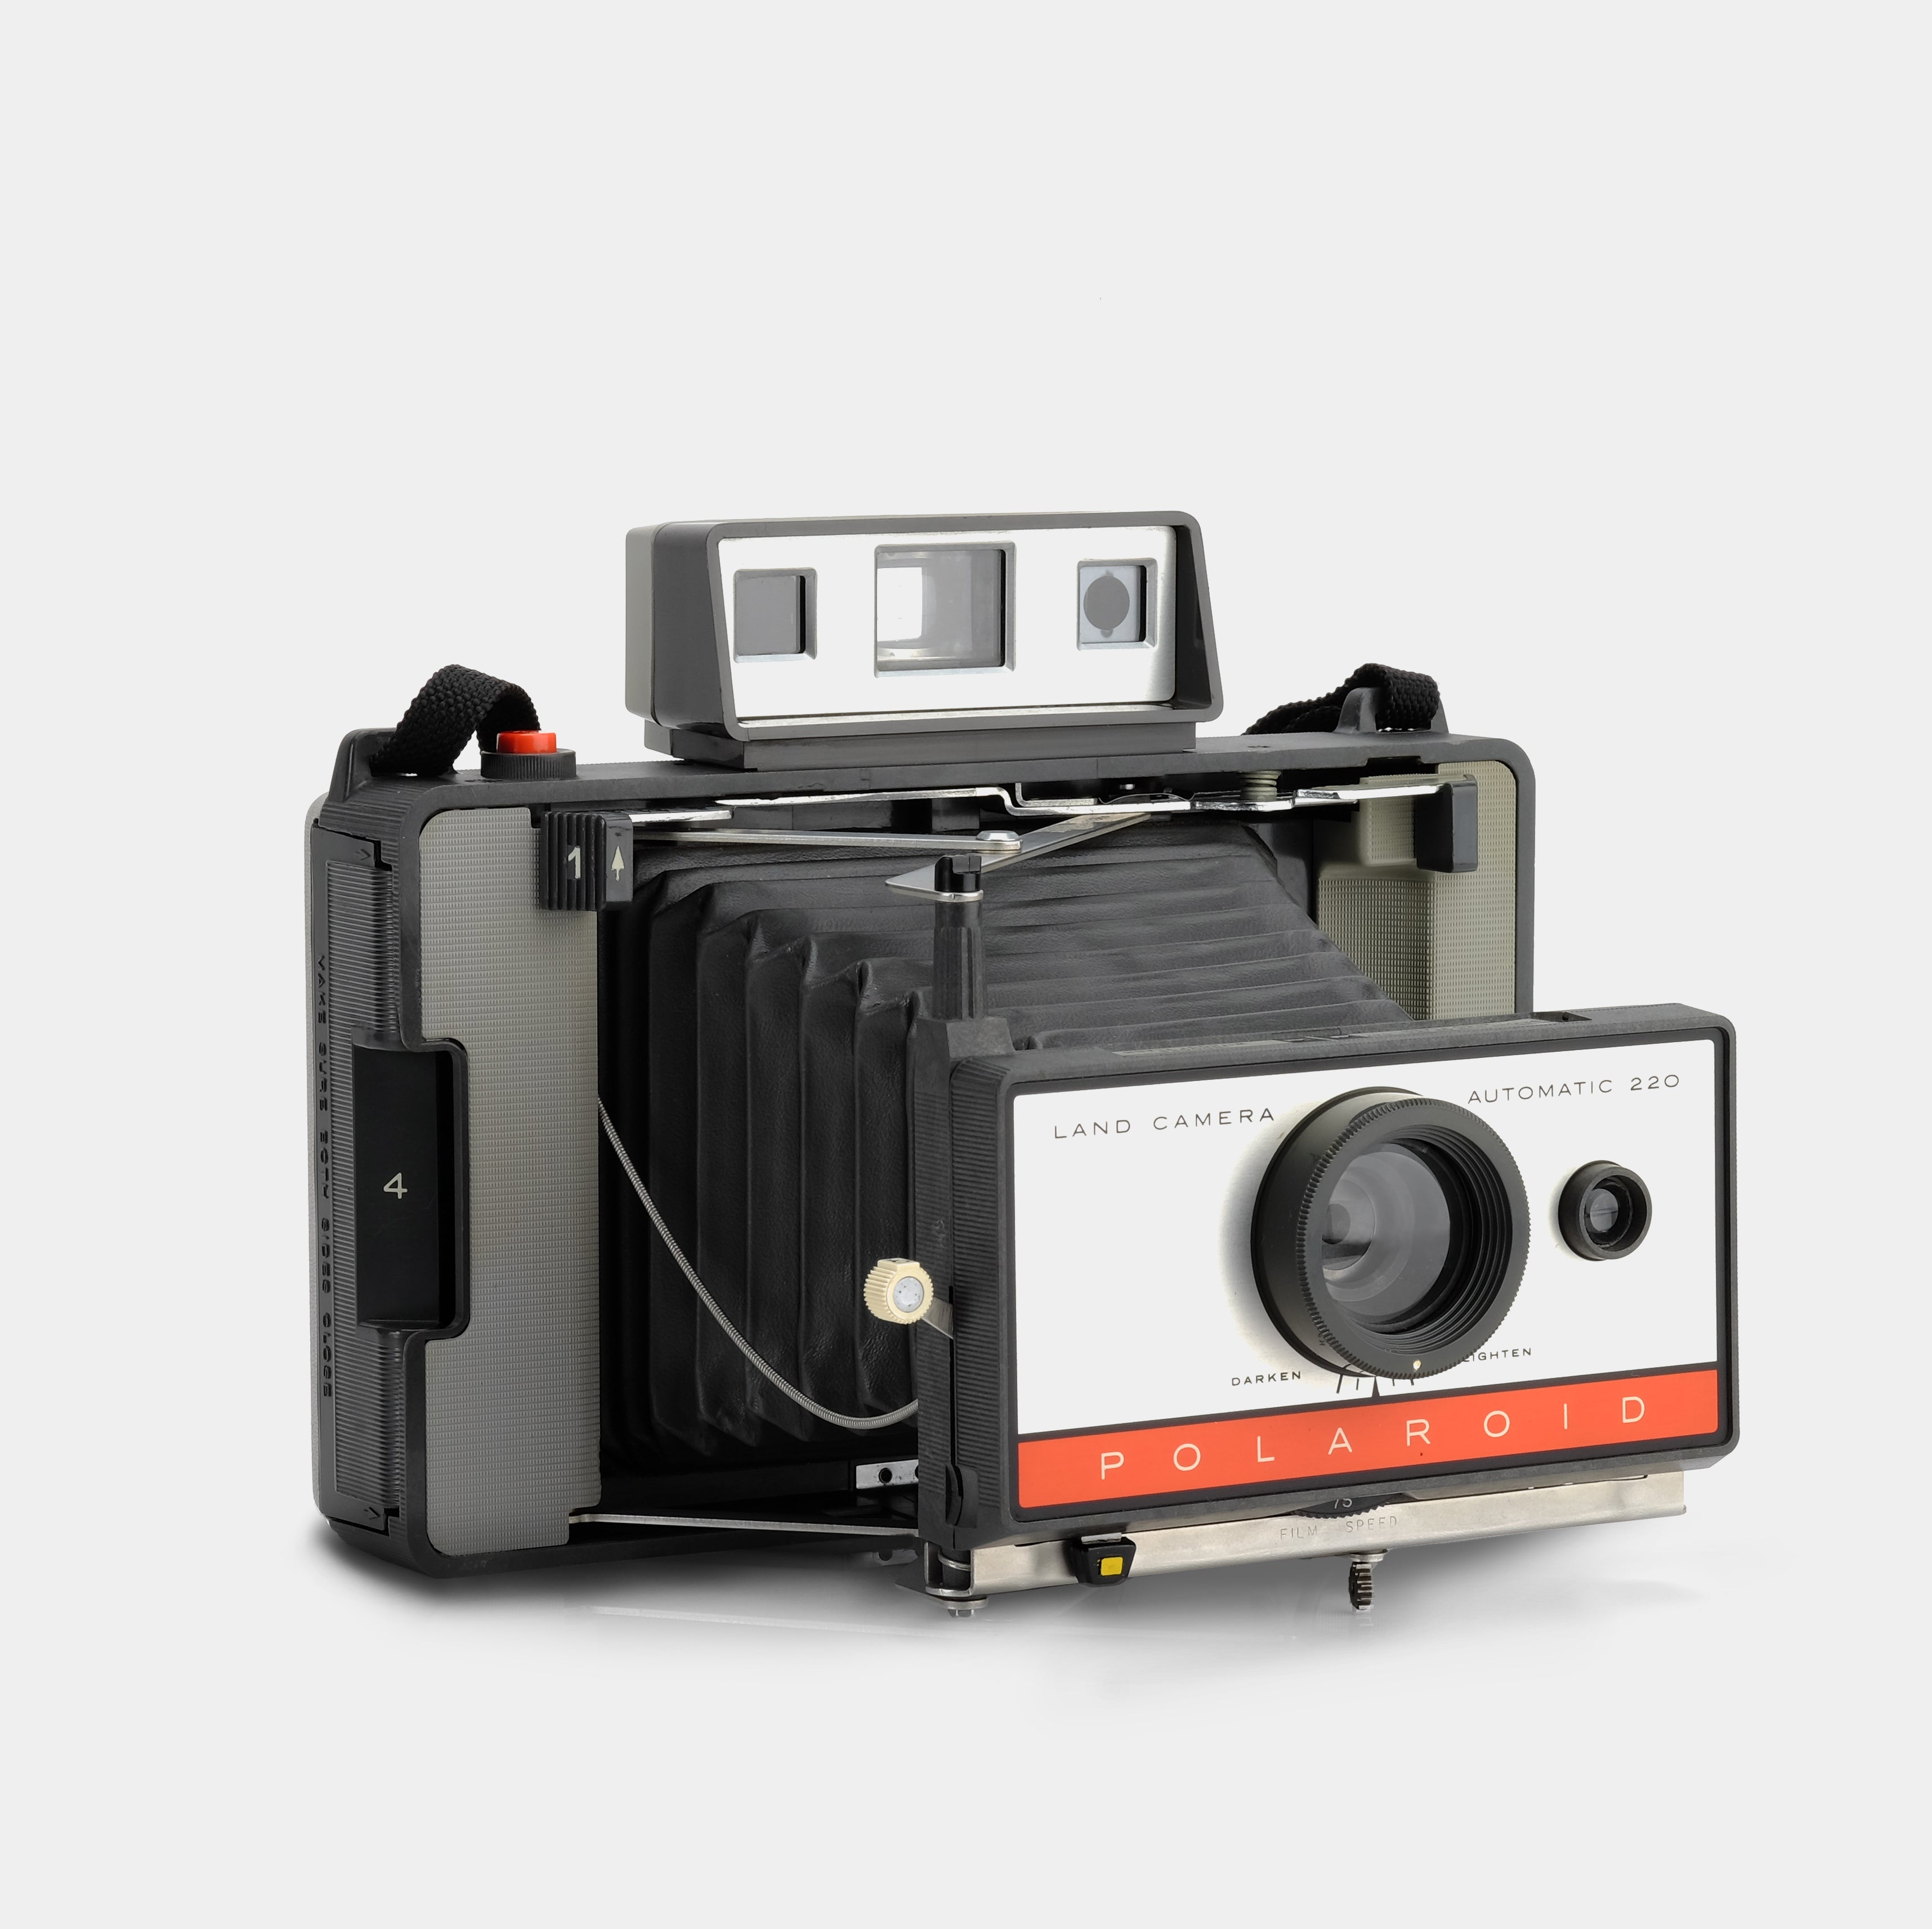 Polaroid Model 220 Packfilm Land Camera